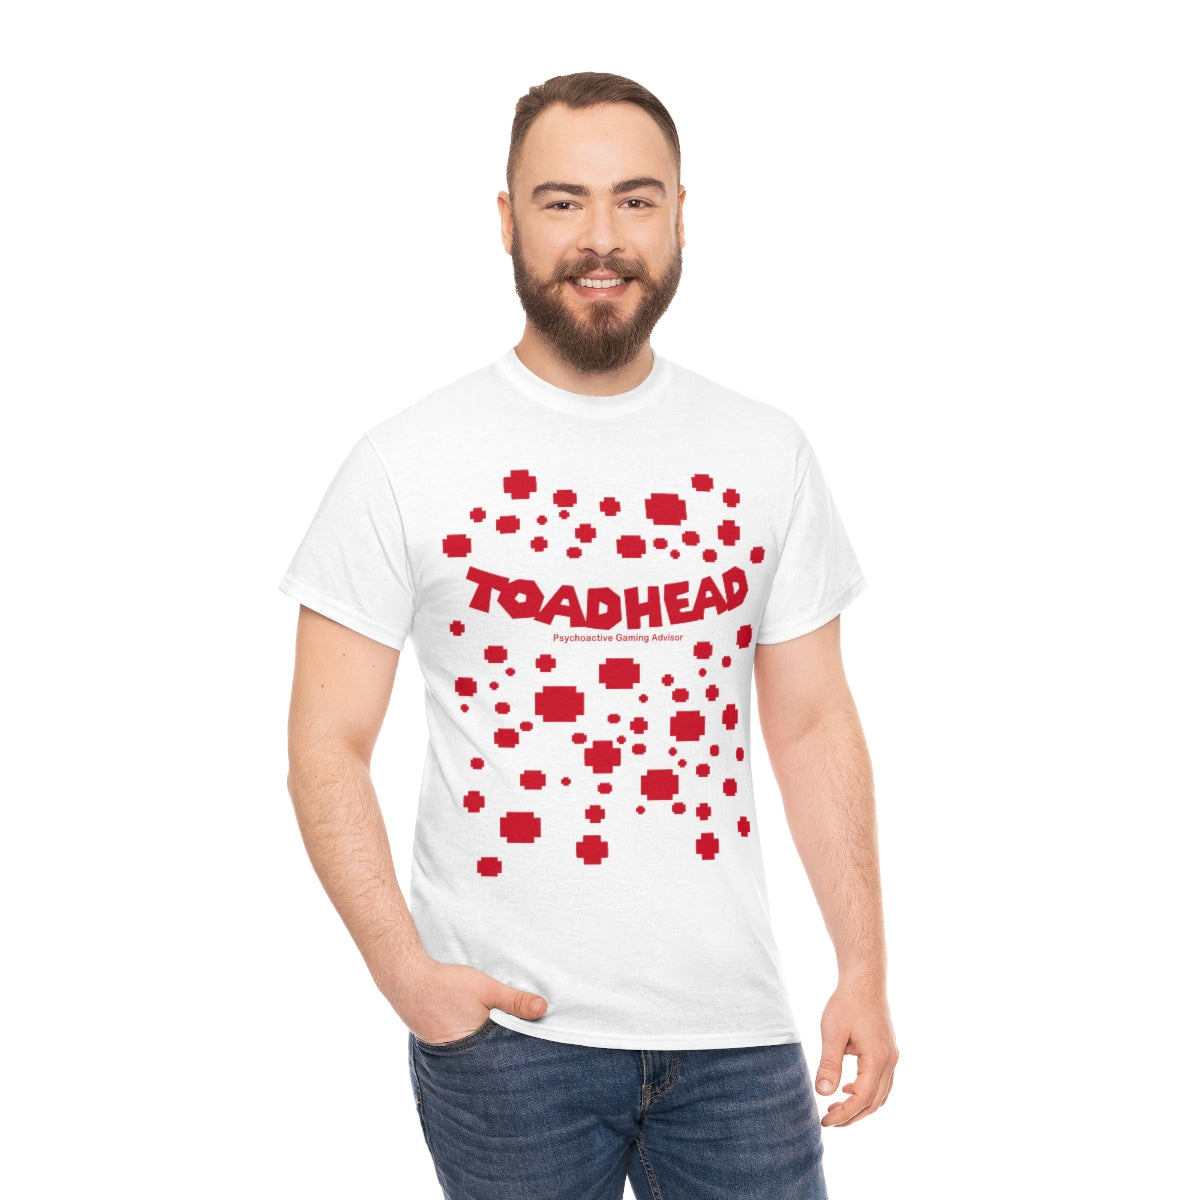 TOADHEAD T-shirt Psychoactive Gaming Advisor